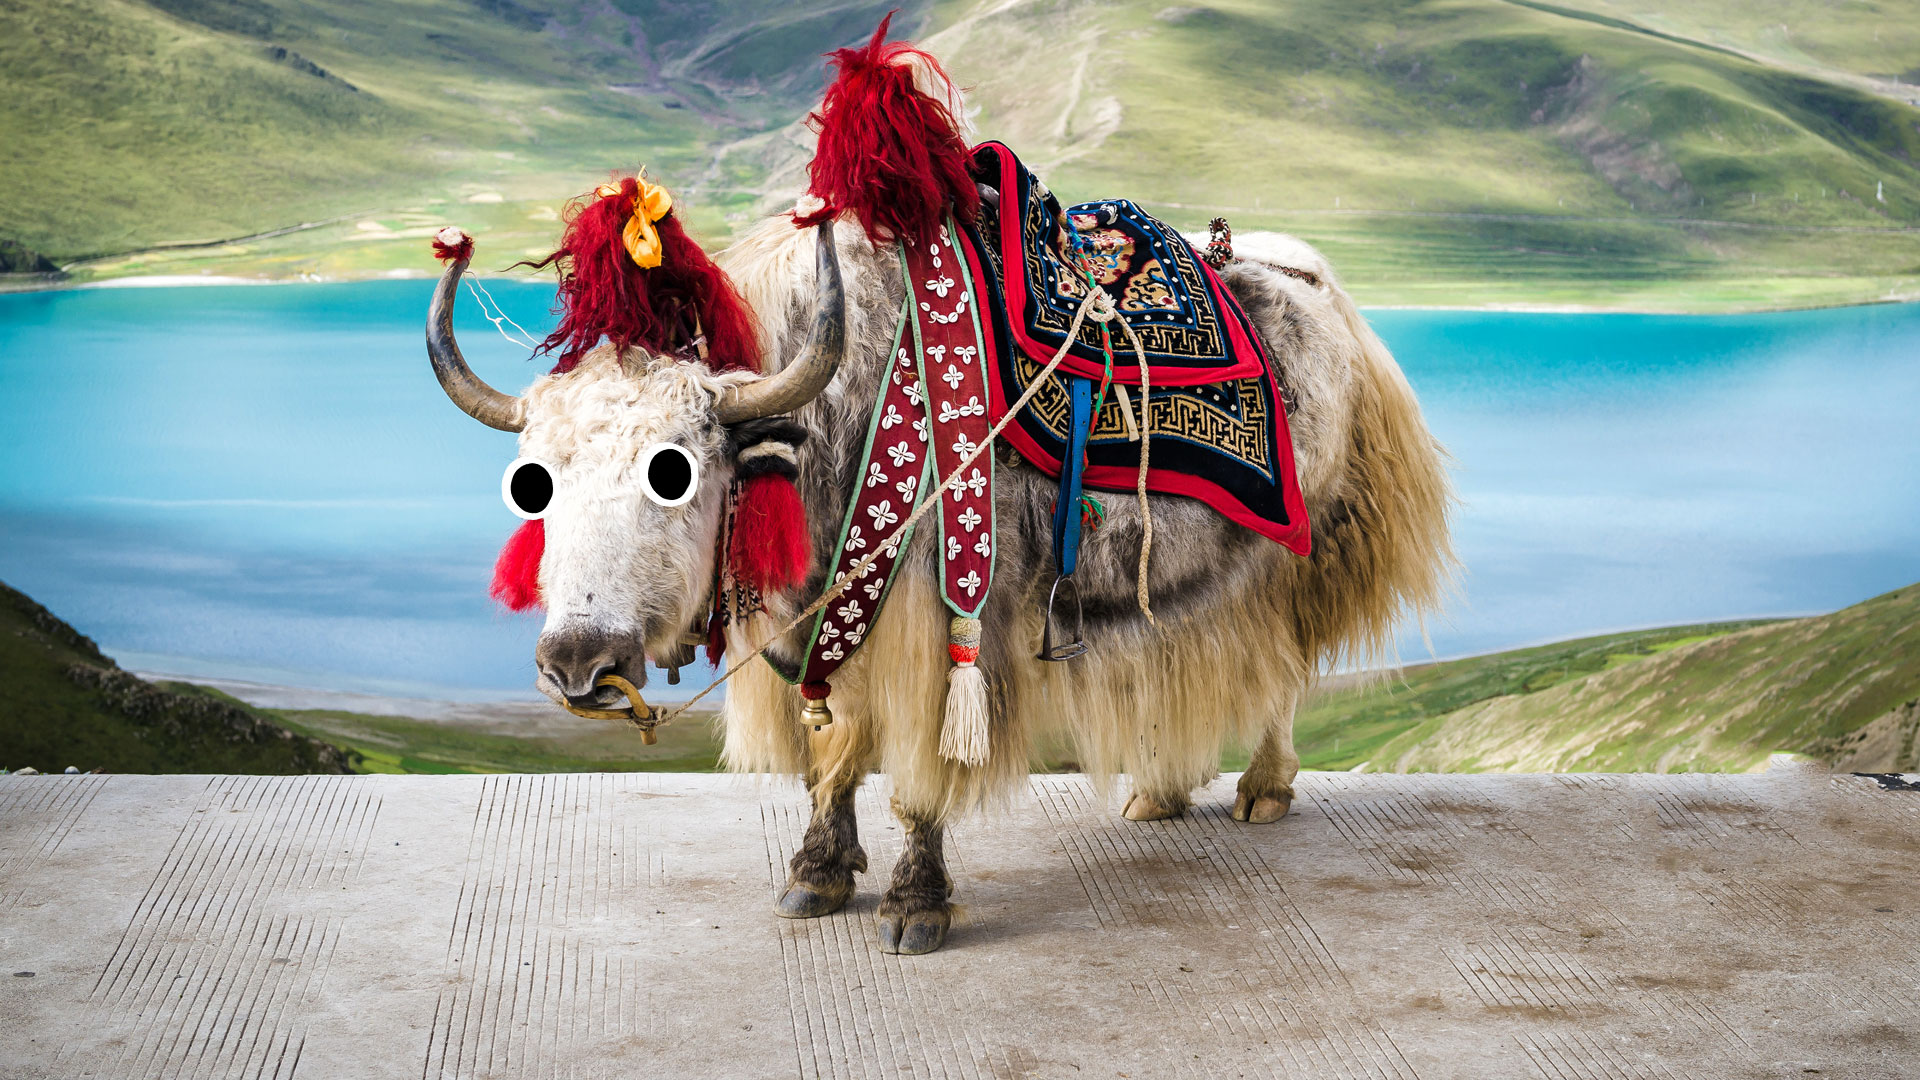 A yak in Nepal